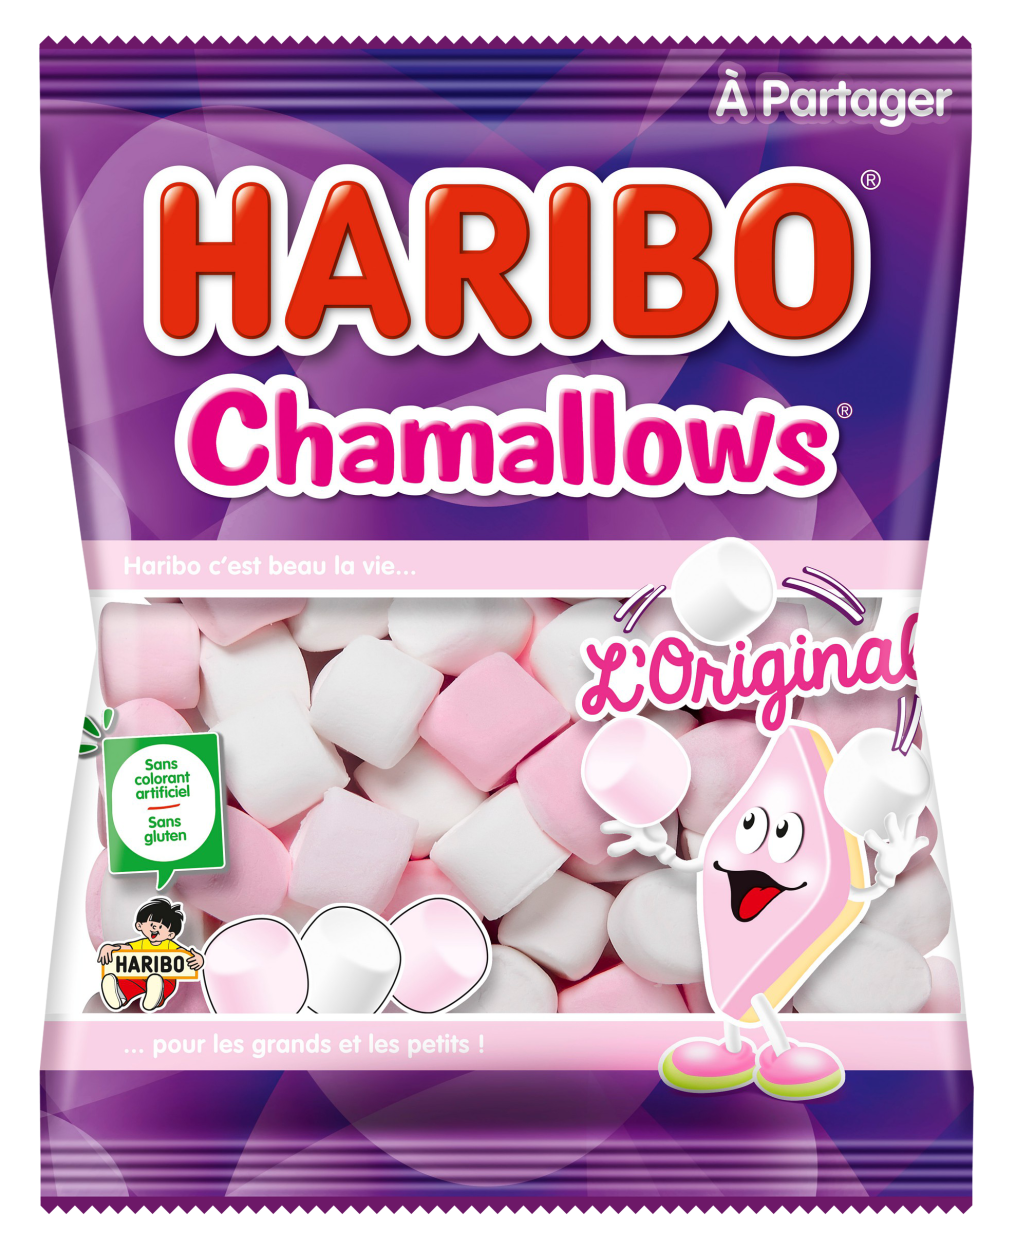 HARIBO Chamallow 100G (30 pack) - France